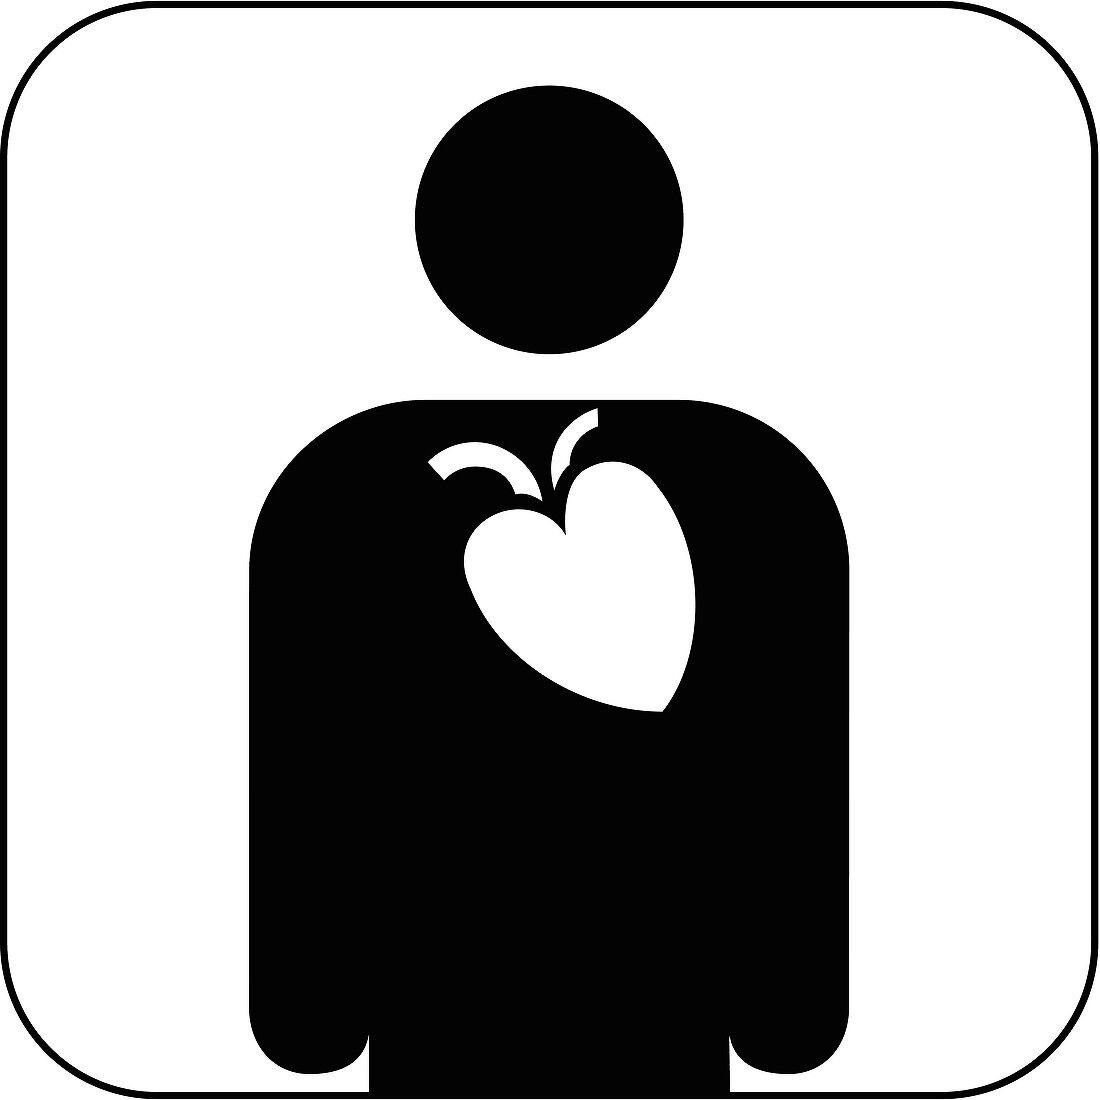 Cardiology symbol,artwork